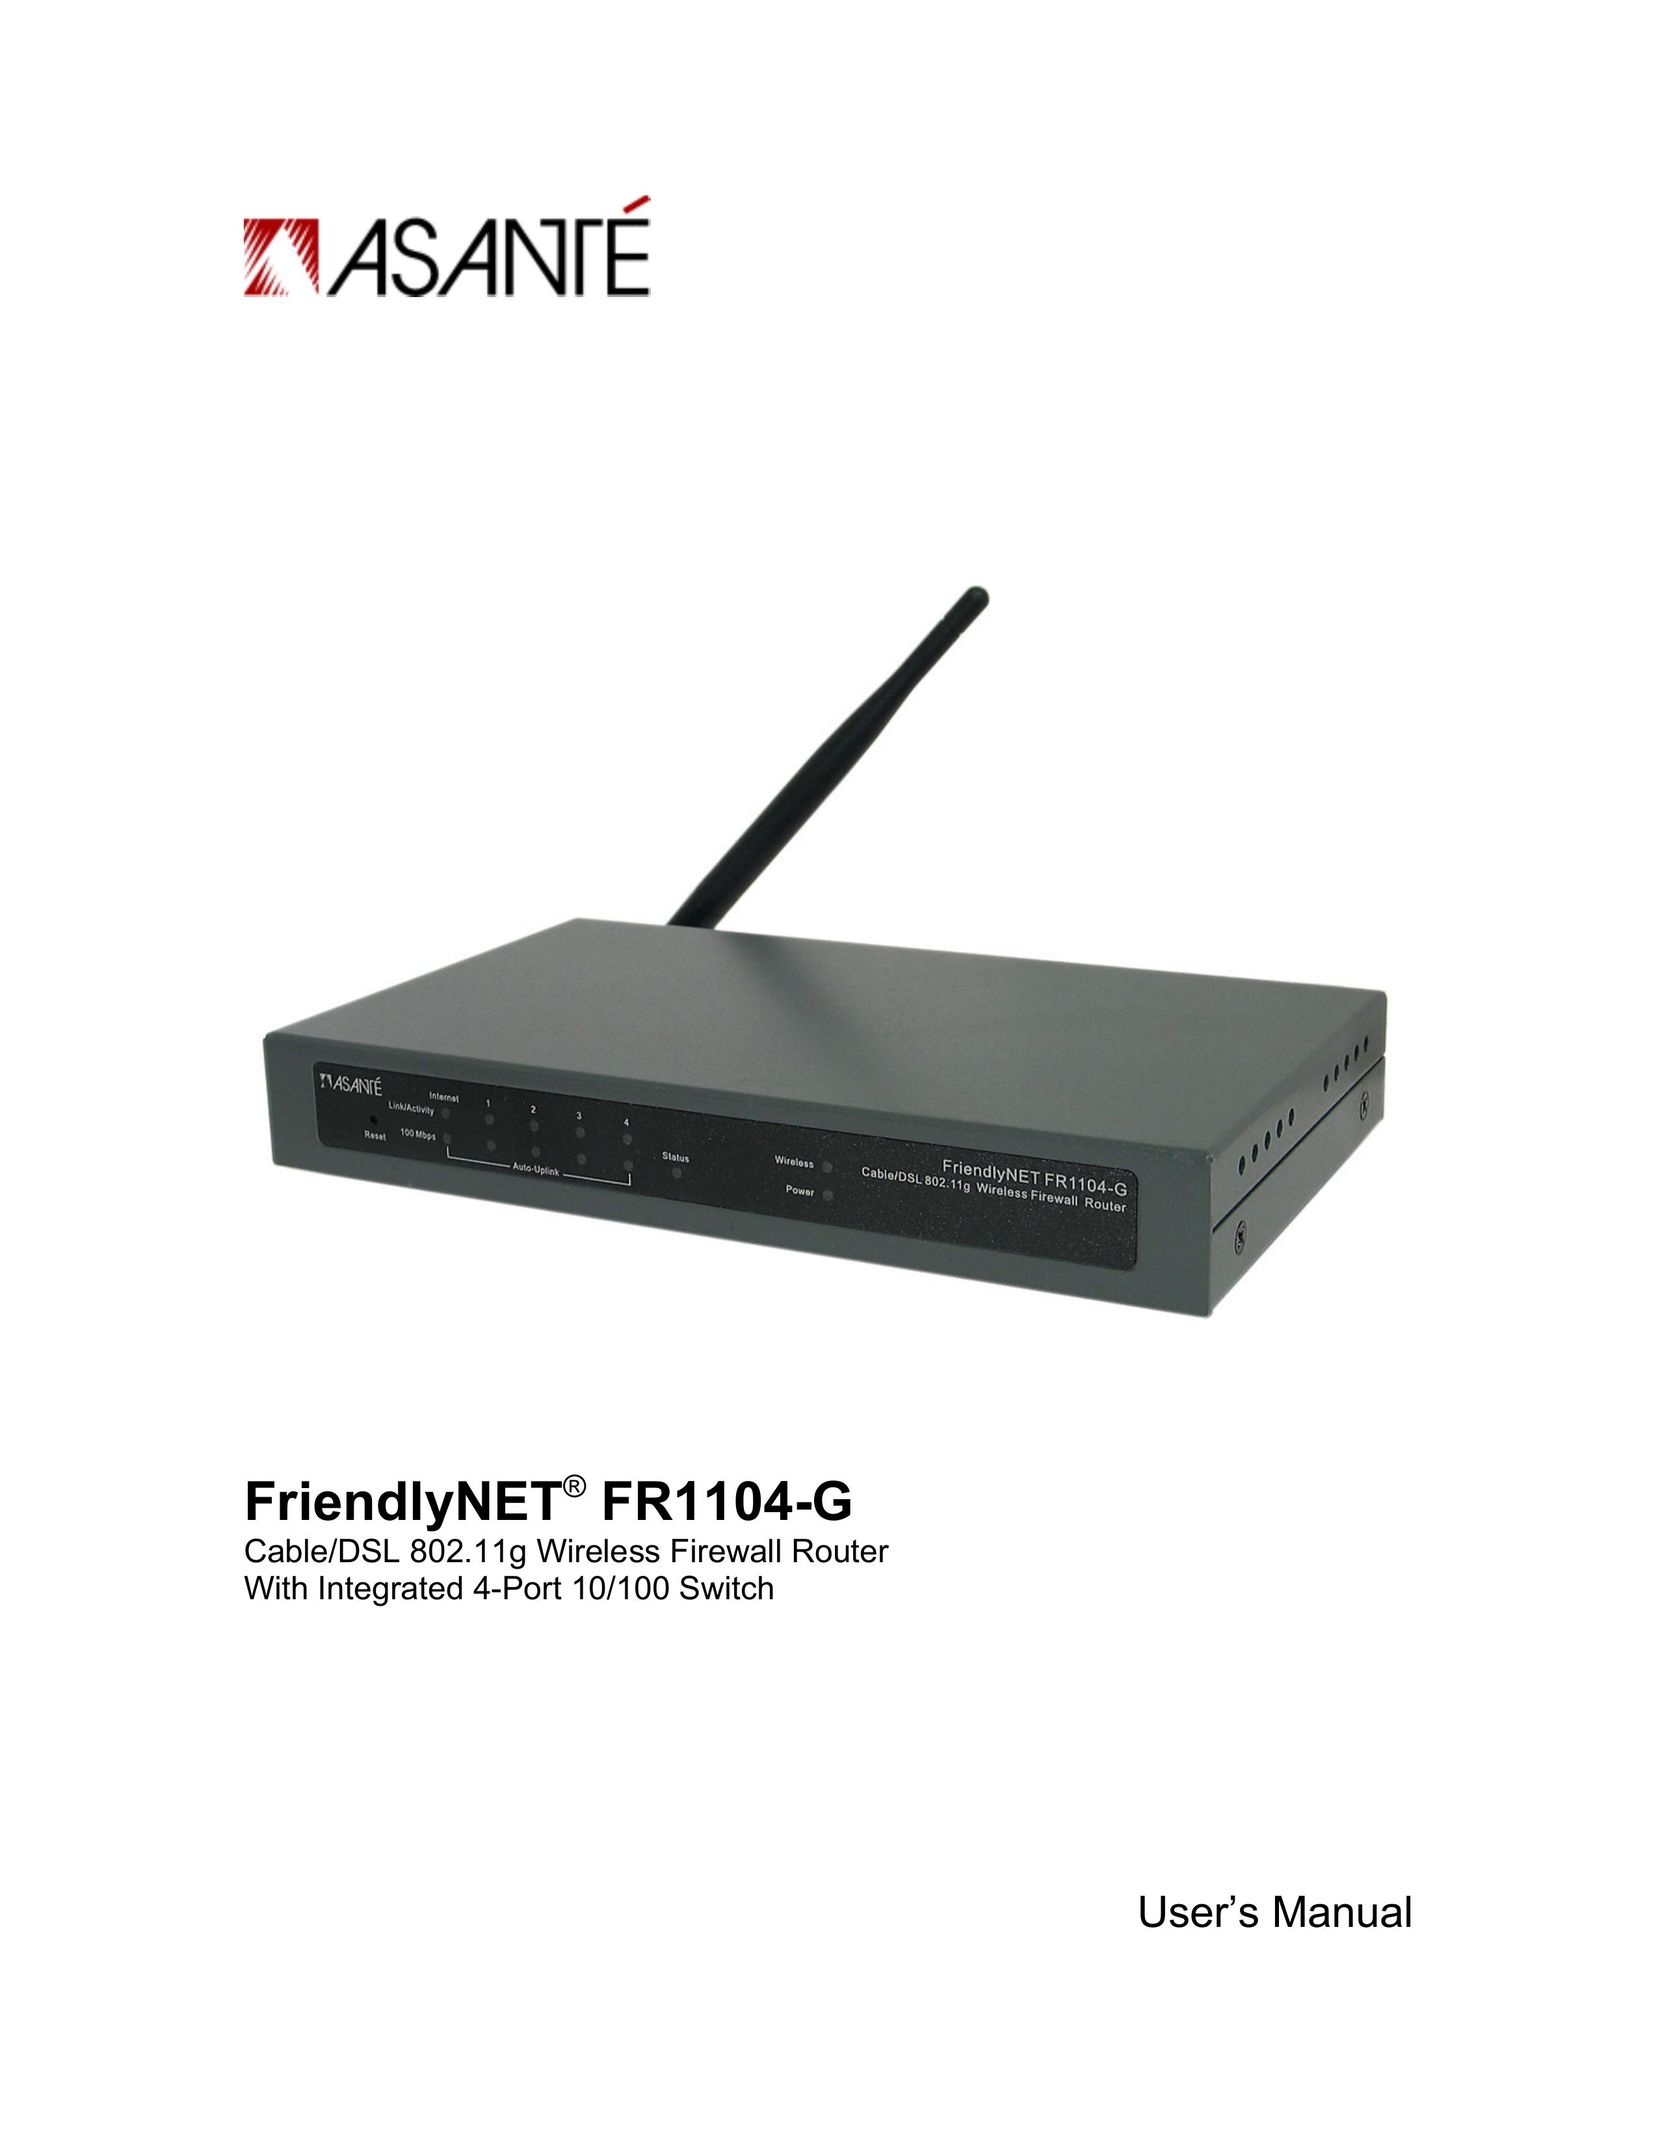 Asante Technologies FR1104-G Network Router User Manual